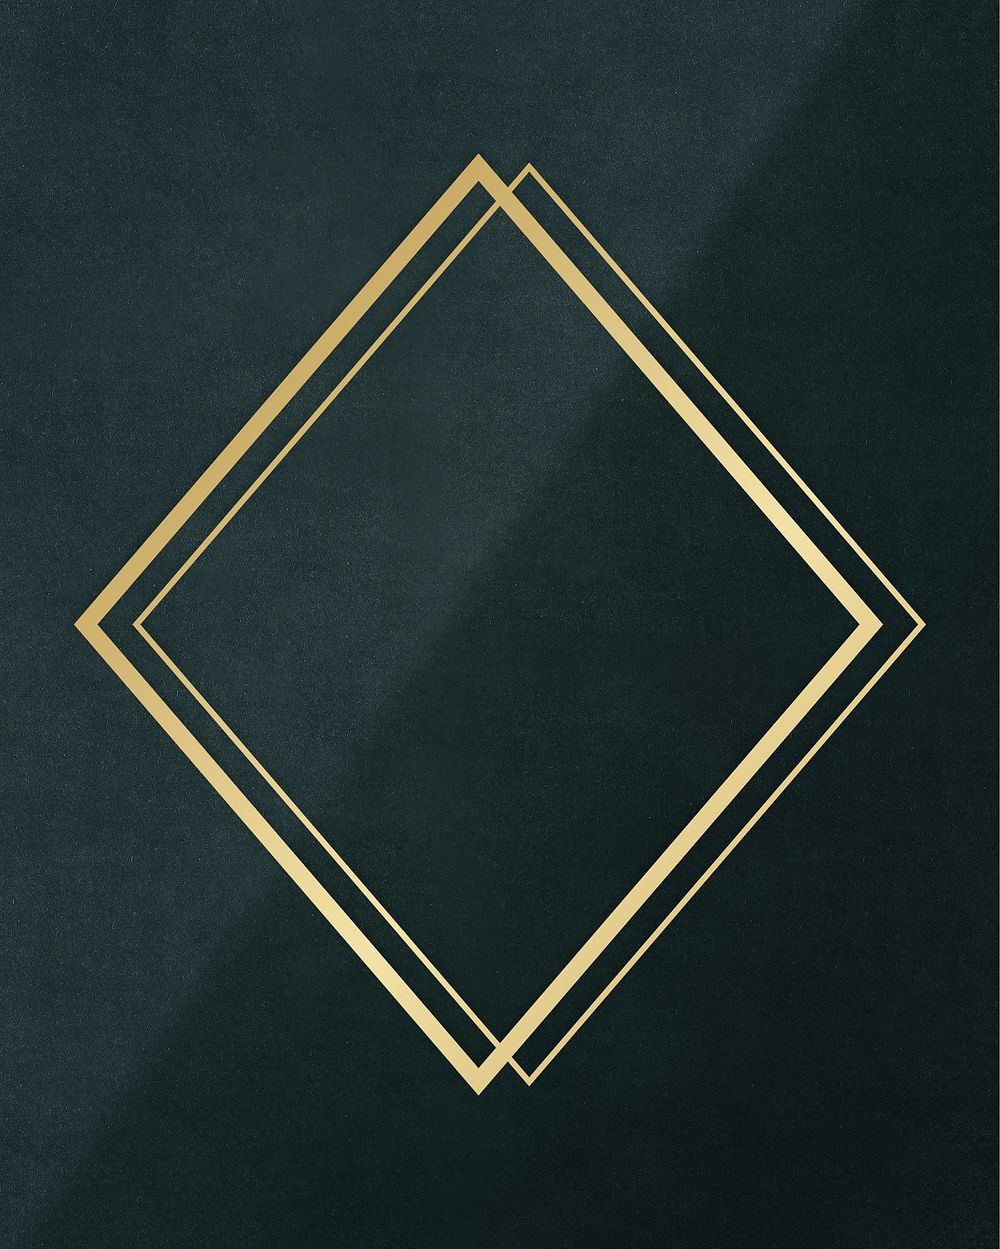 Gold rhombus frame on a dark gray concrete textured background illustration